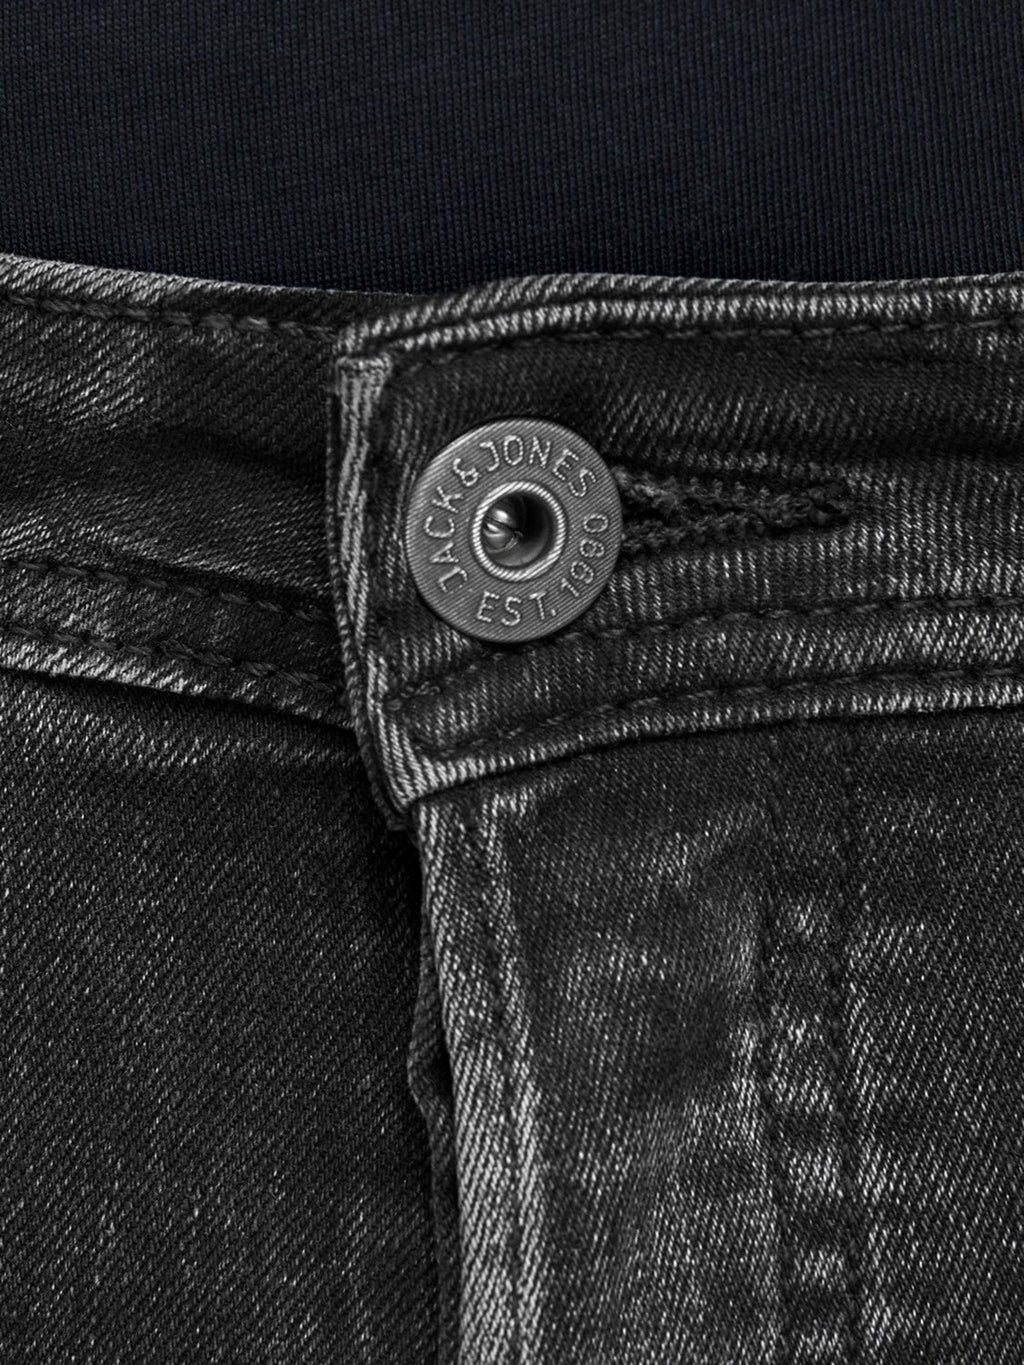 Glenn Original Jeans - schwarzer Denim